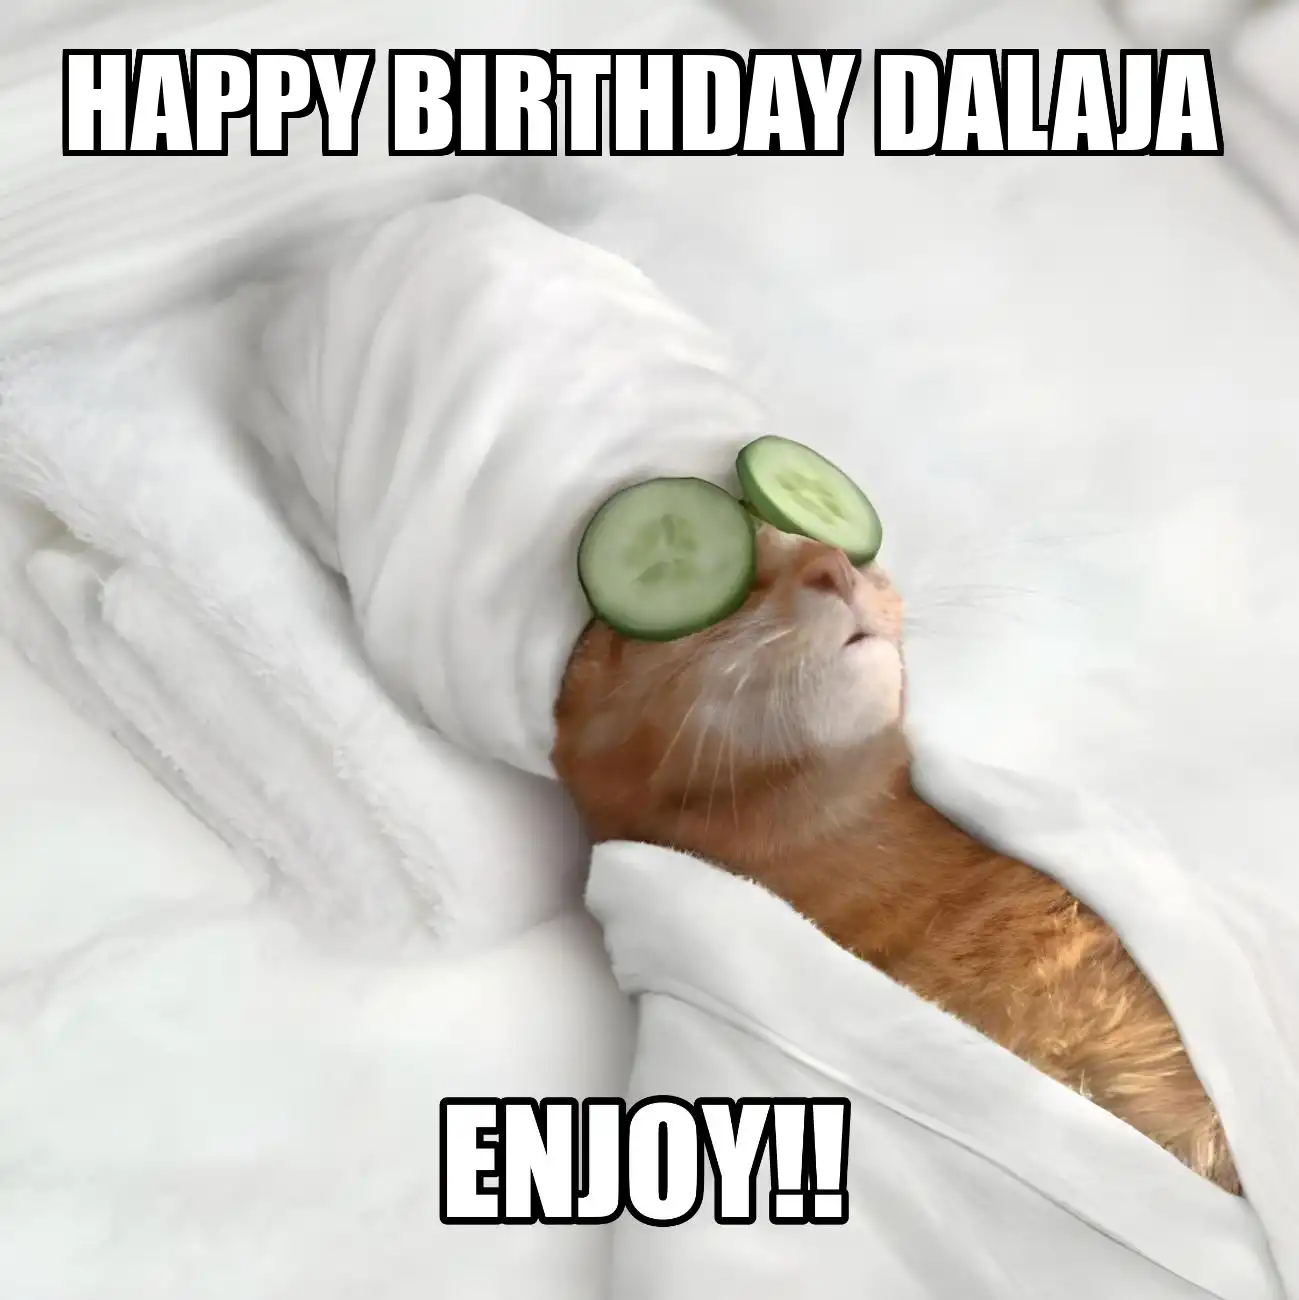 Happy Birthday Dalaja Enjoy Cat Meme